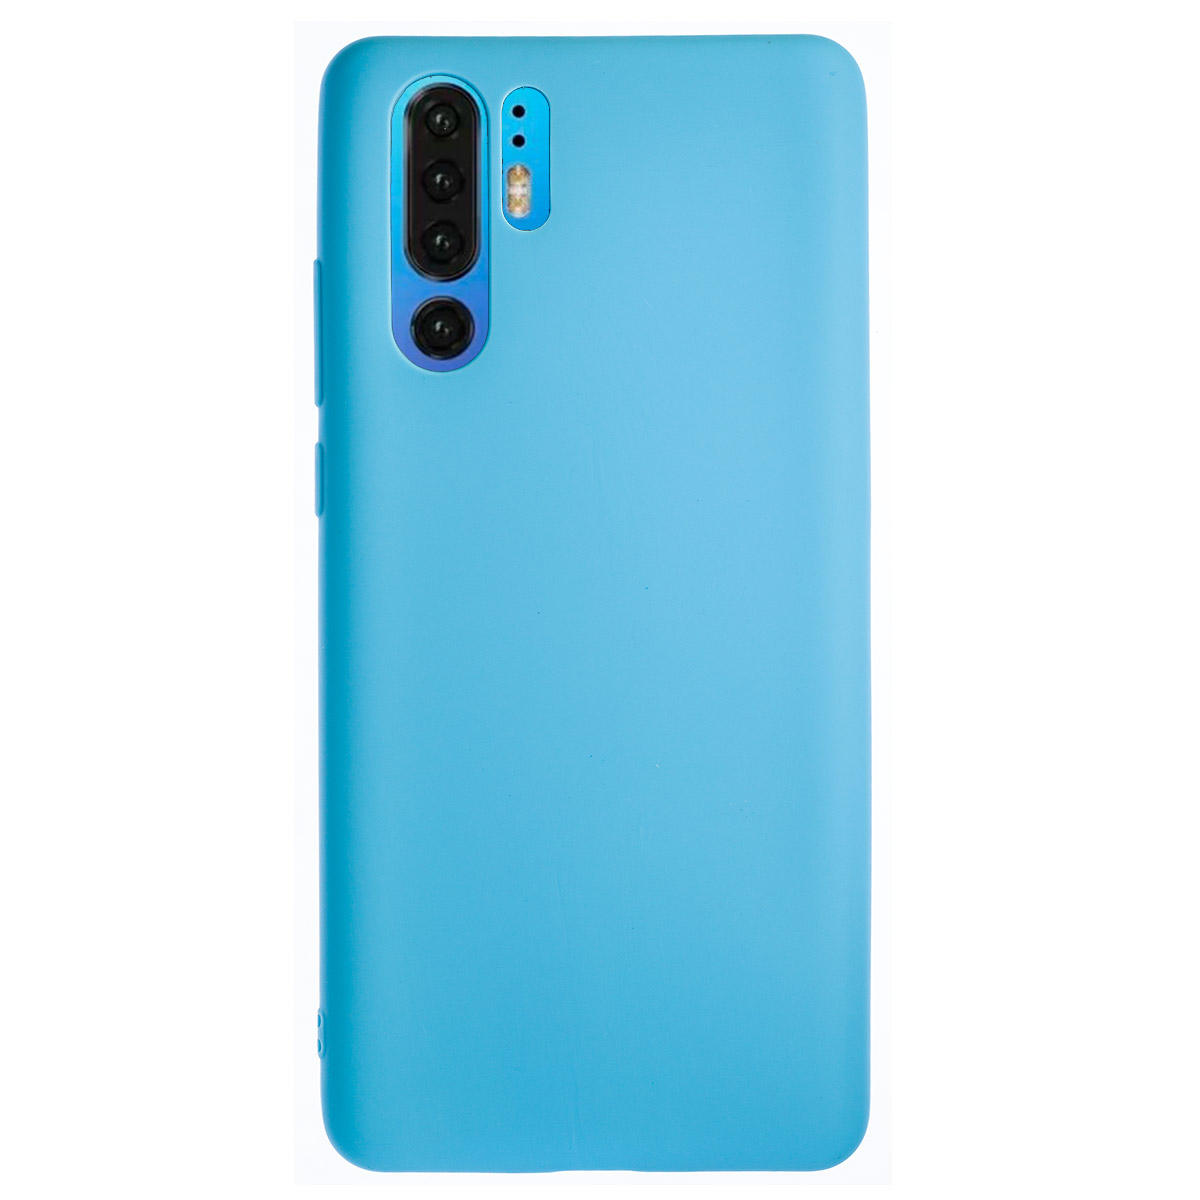 Husa Silicon Slim Huawei P30 Pro, Albastru Mat thumb